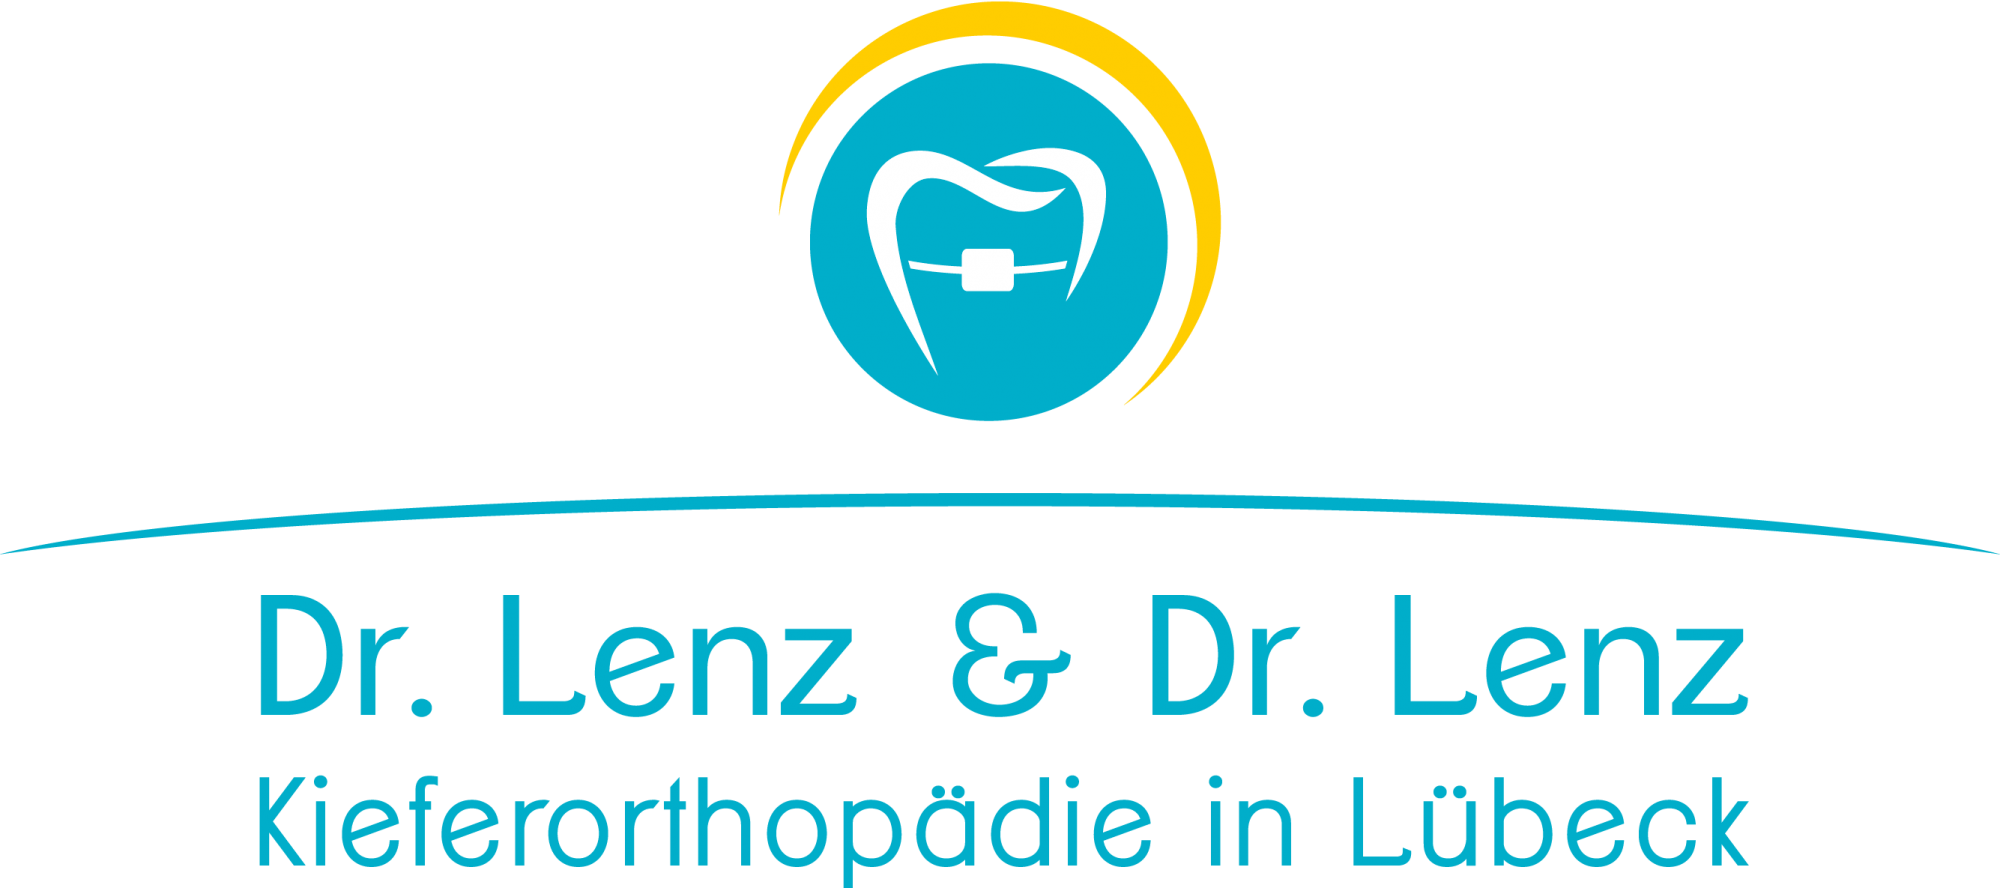 Dr. Lenz & Dr. Lenz Kieferorthopädie